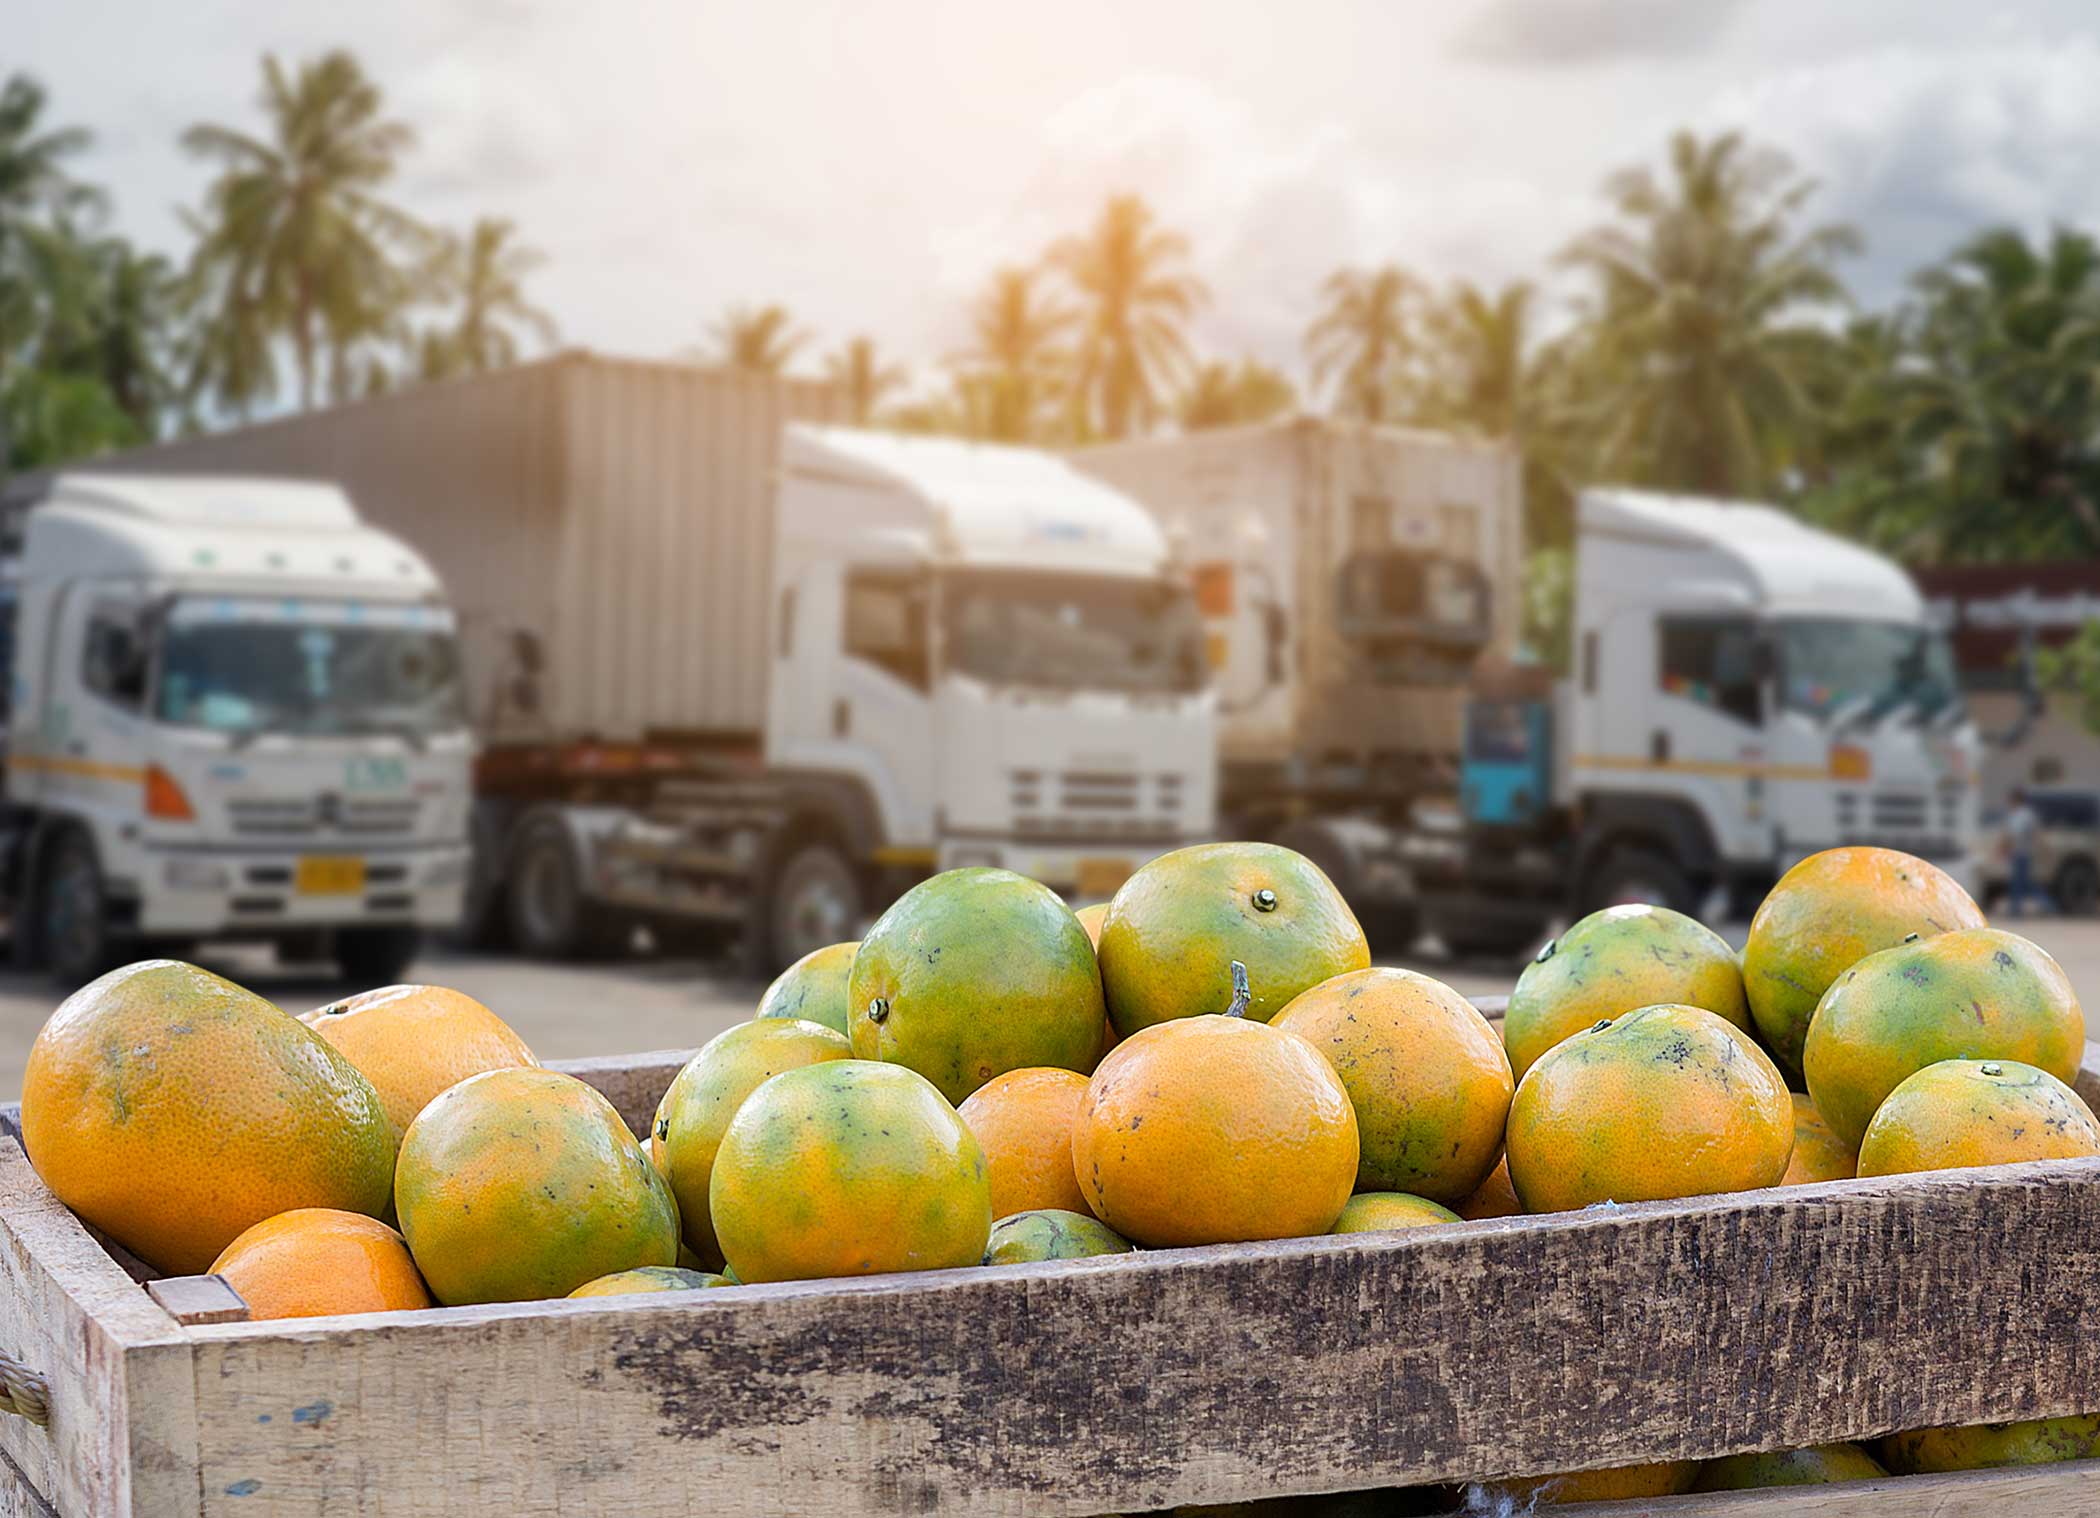 iGPS plastic pallets meet food grade standards hero image with trucks transporting fruit